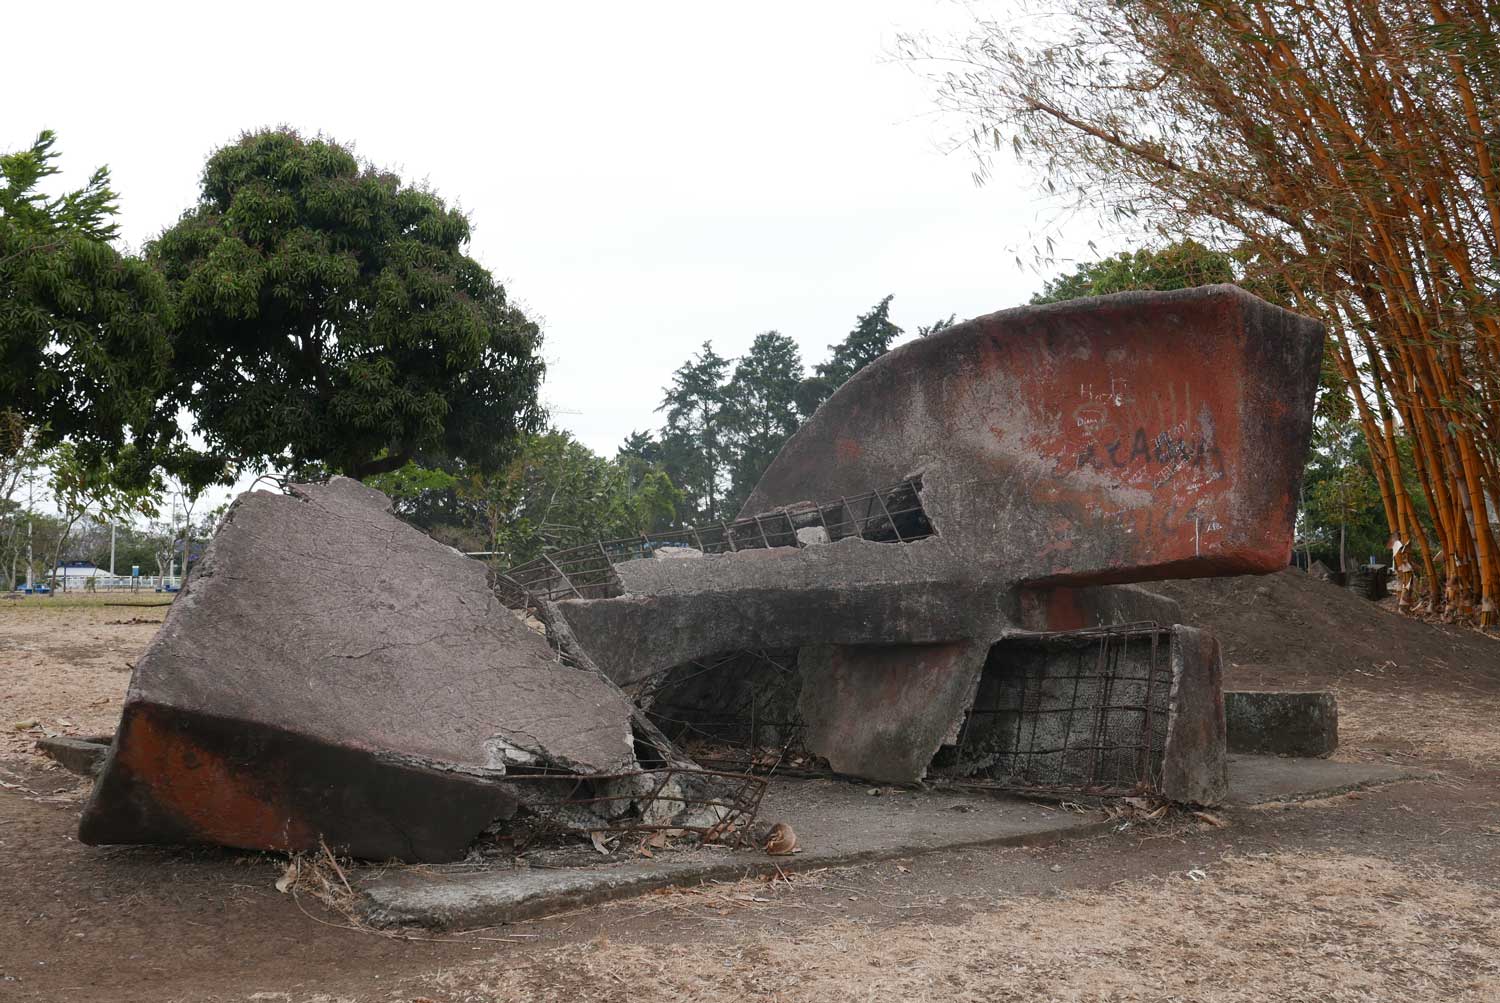 Collapsed rain shelter in La Sabana park in San Jose, Costa Rica